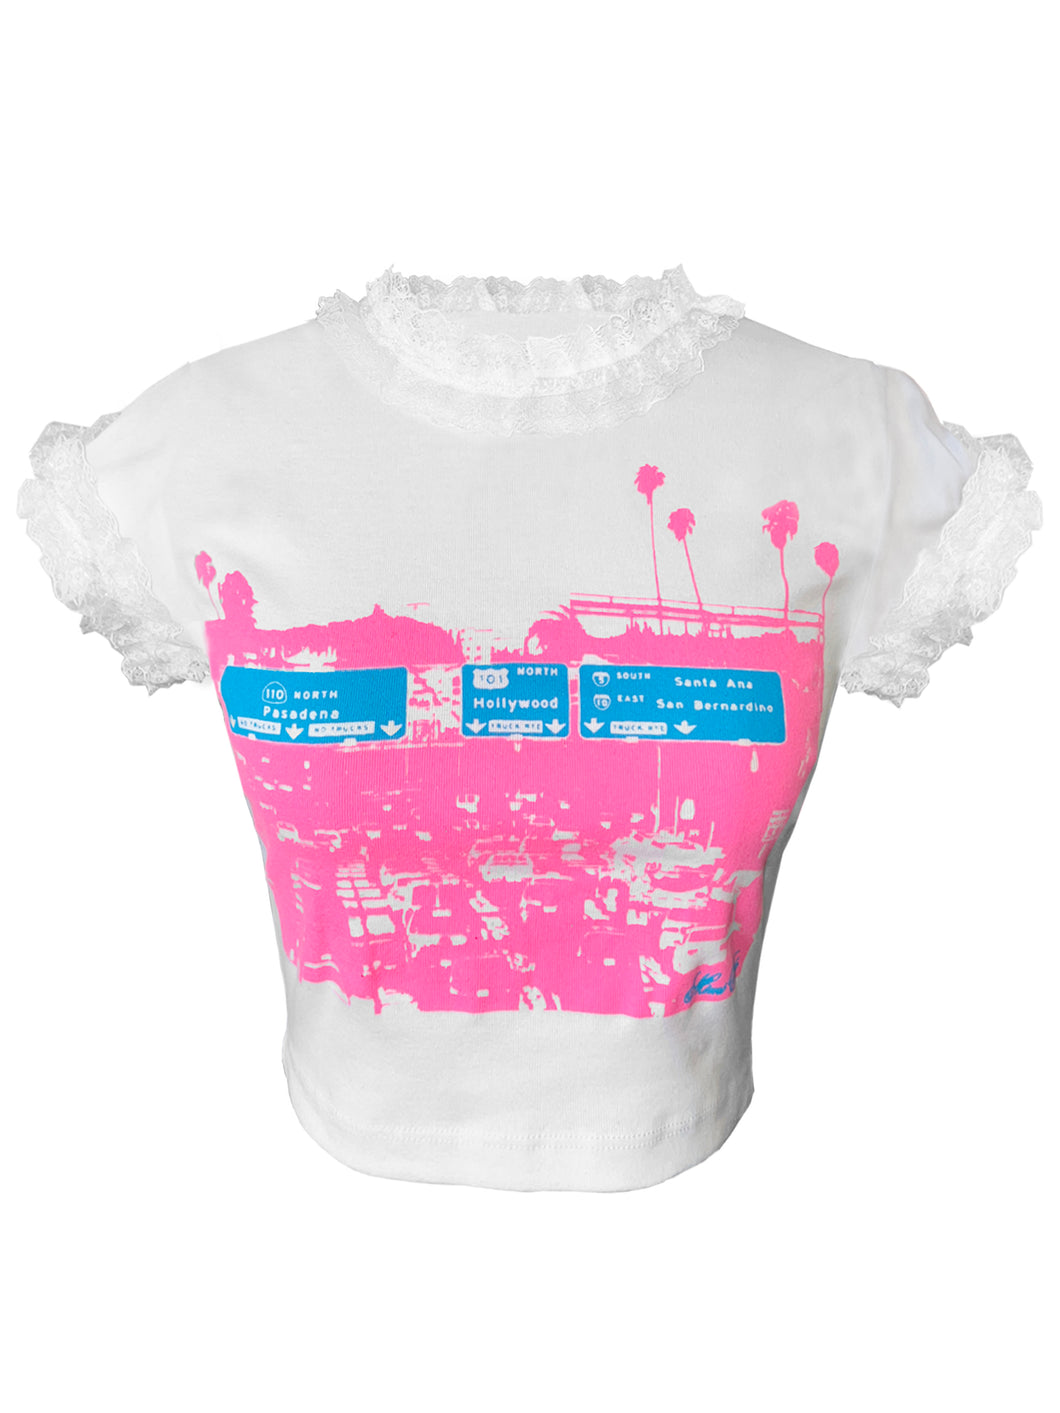 LA Freeway Baby T-Shirt (White, Fluorescent Pink & Blue)